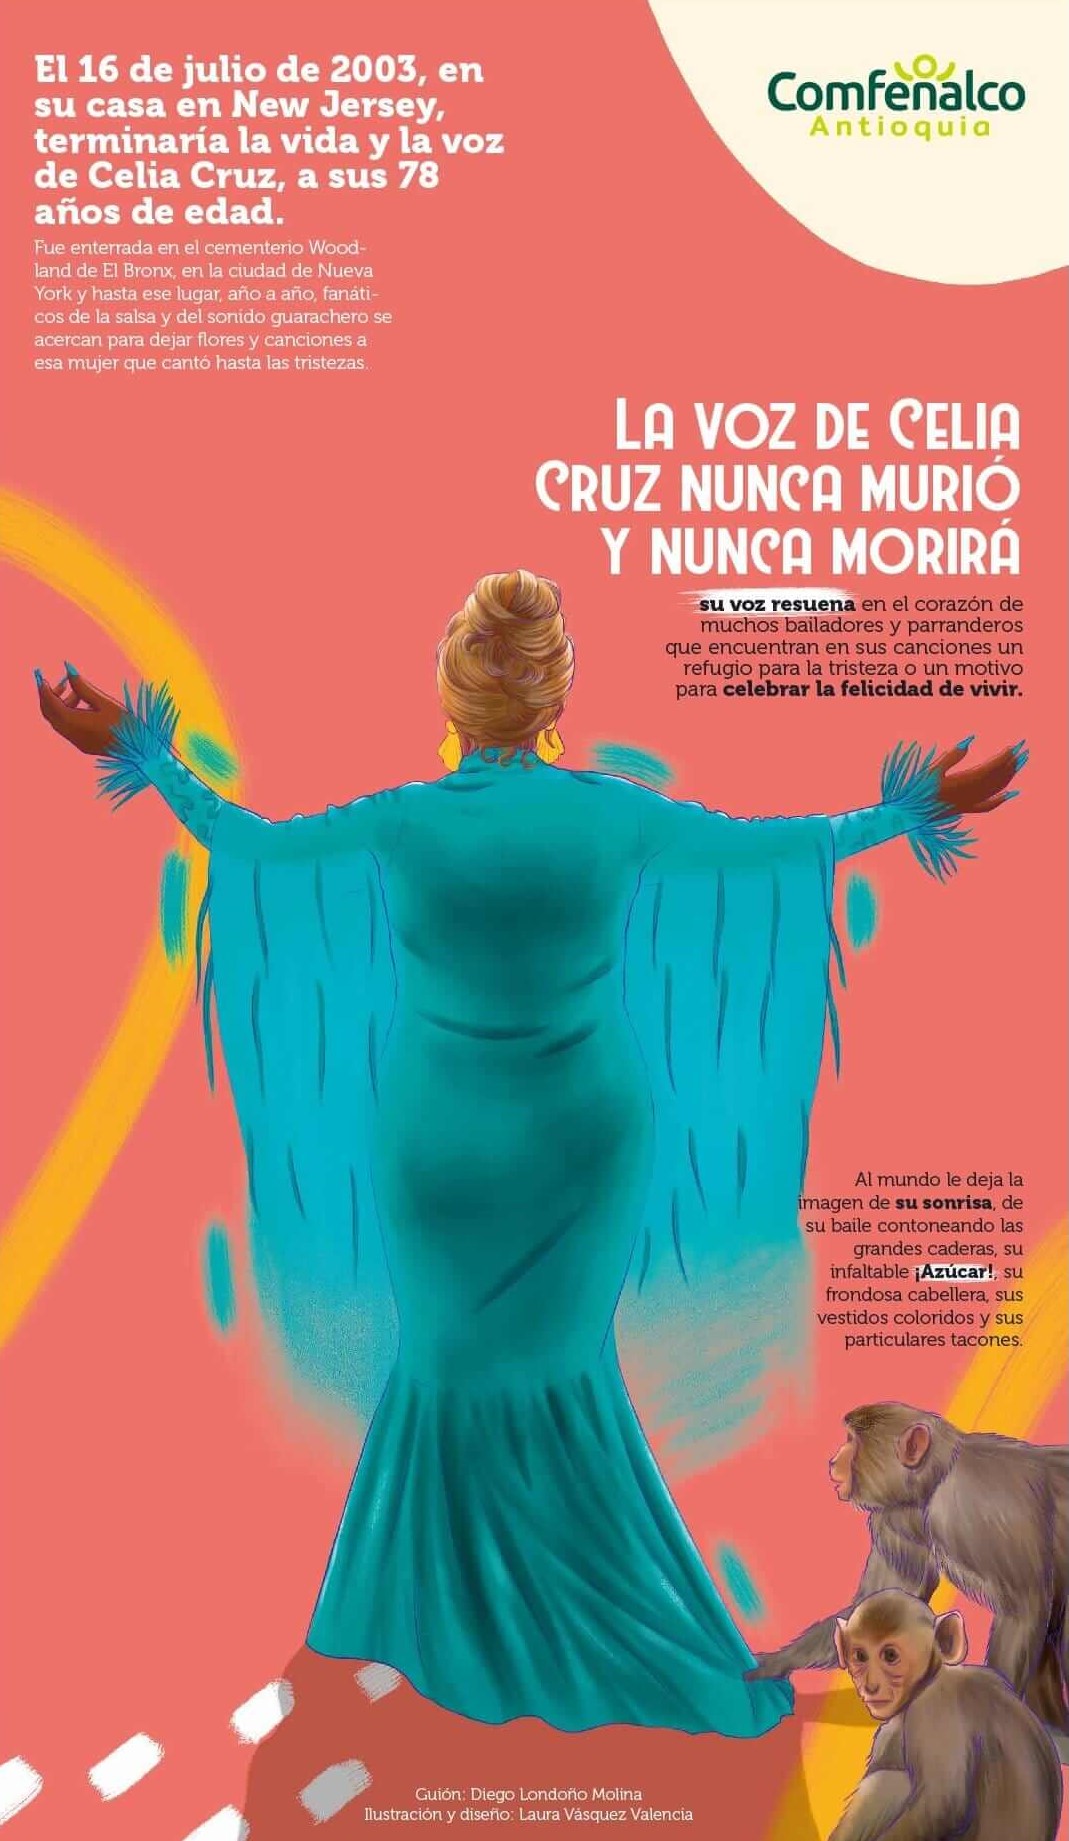 La voz de Celia Cruz nunca murió